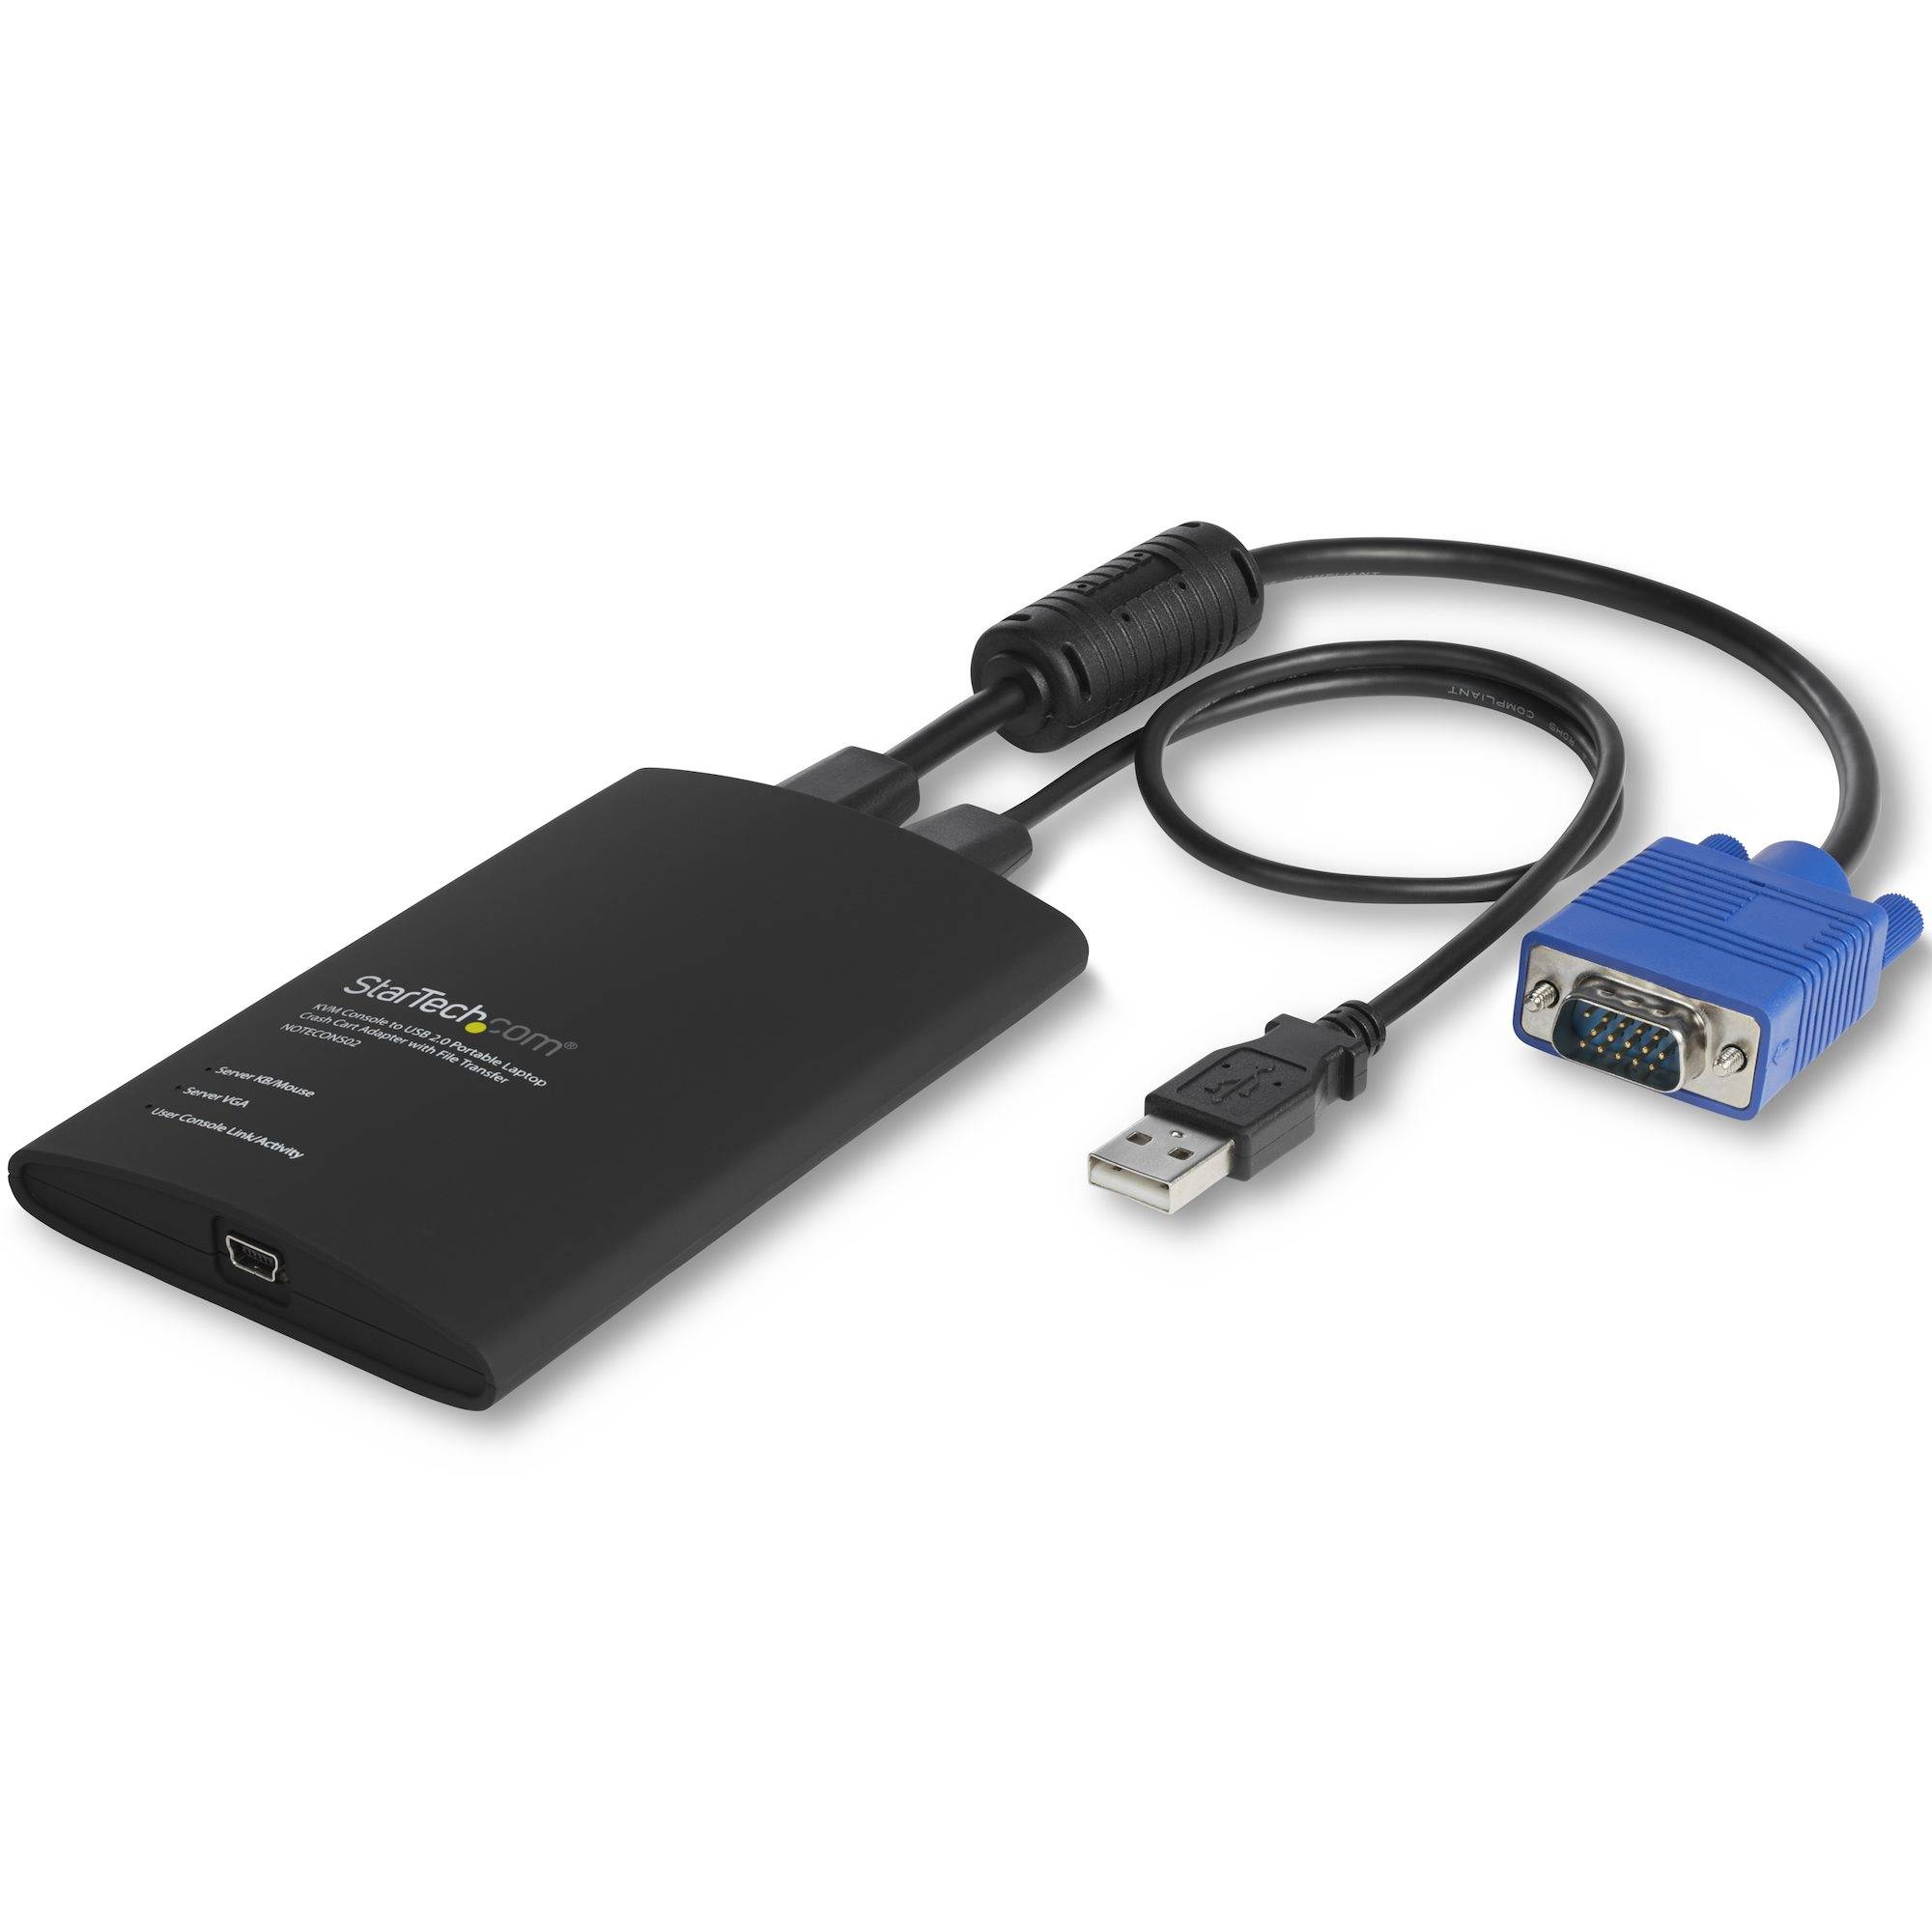 Rca Informatique - Image du produit : PORTABLE KVM CONSOLE - VGA USB CRASH CART ADAPTER